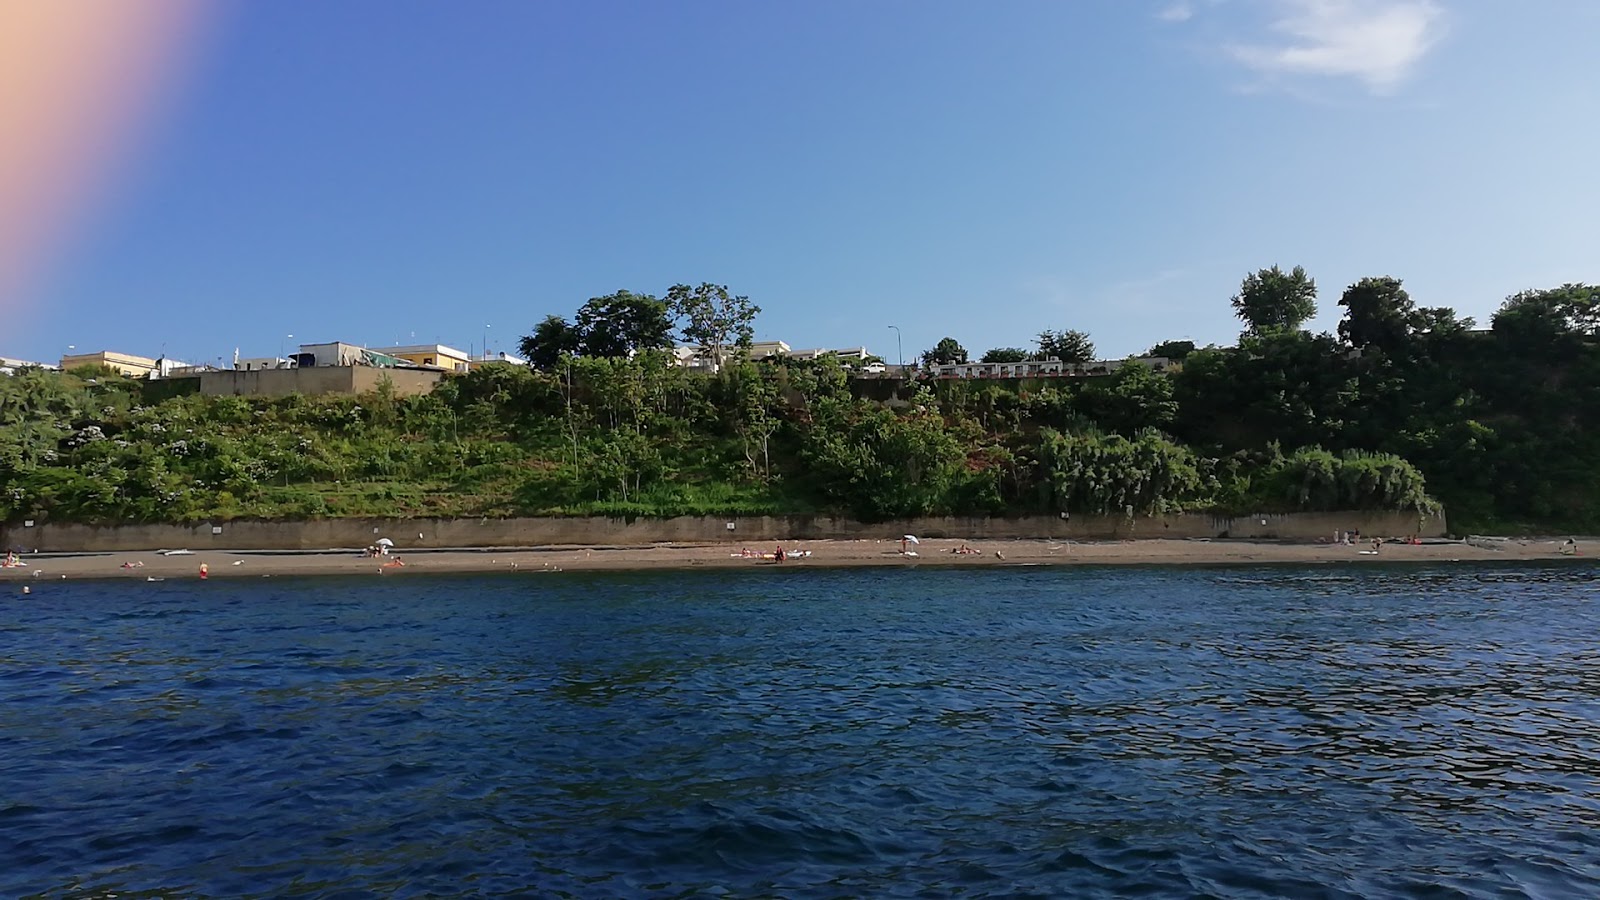 Foto de Spiaggia di Silurenza con muy limpio nivel de limpieza